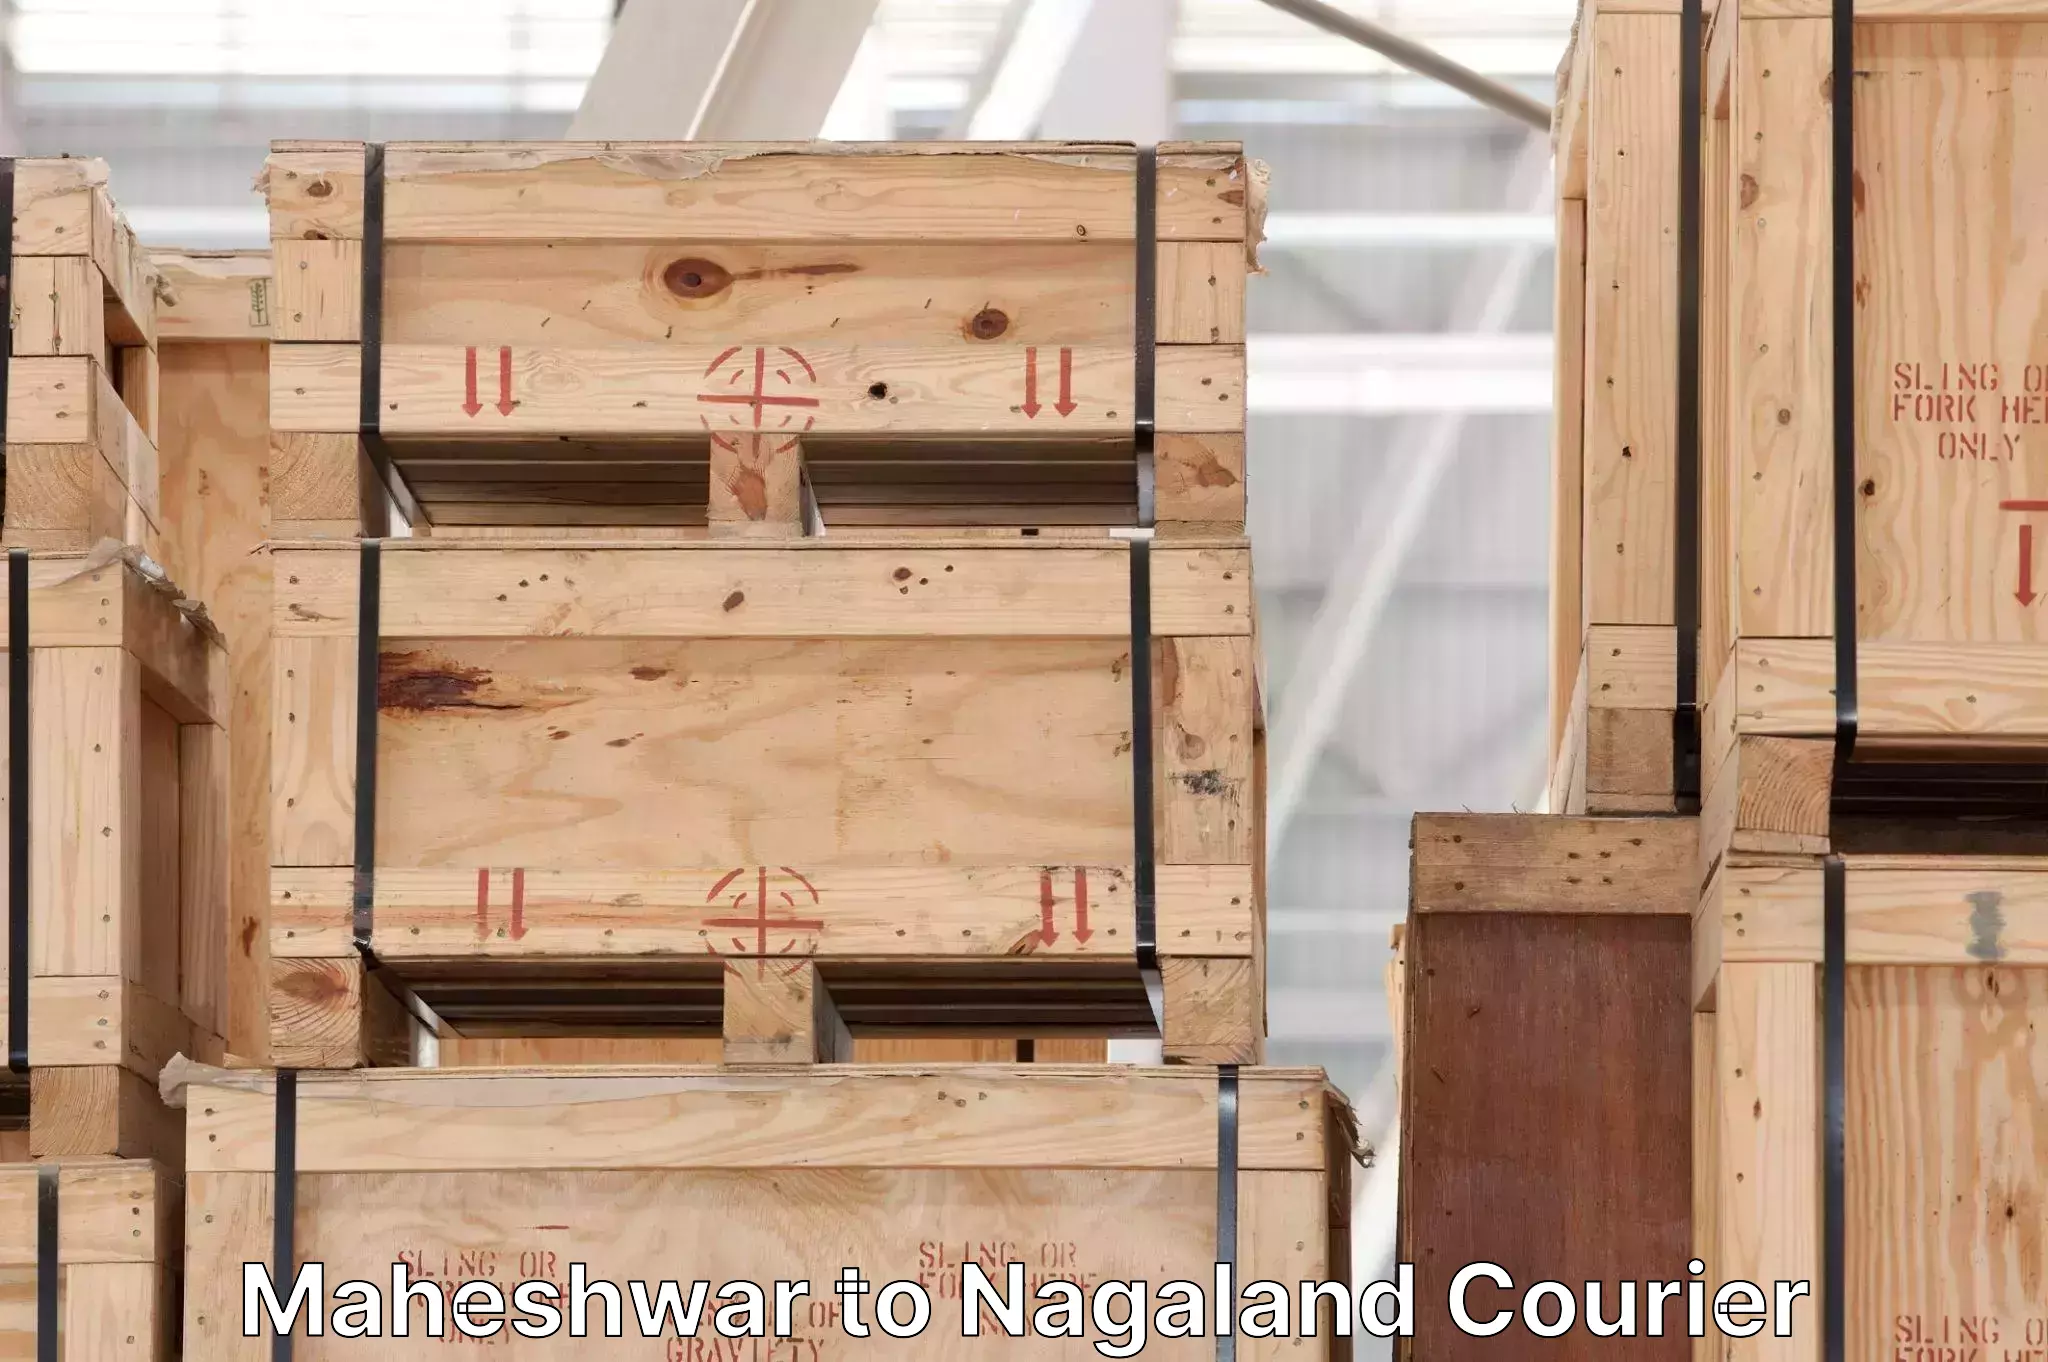 Nationwide delivery network Maheshwar to Nagaland